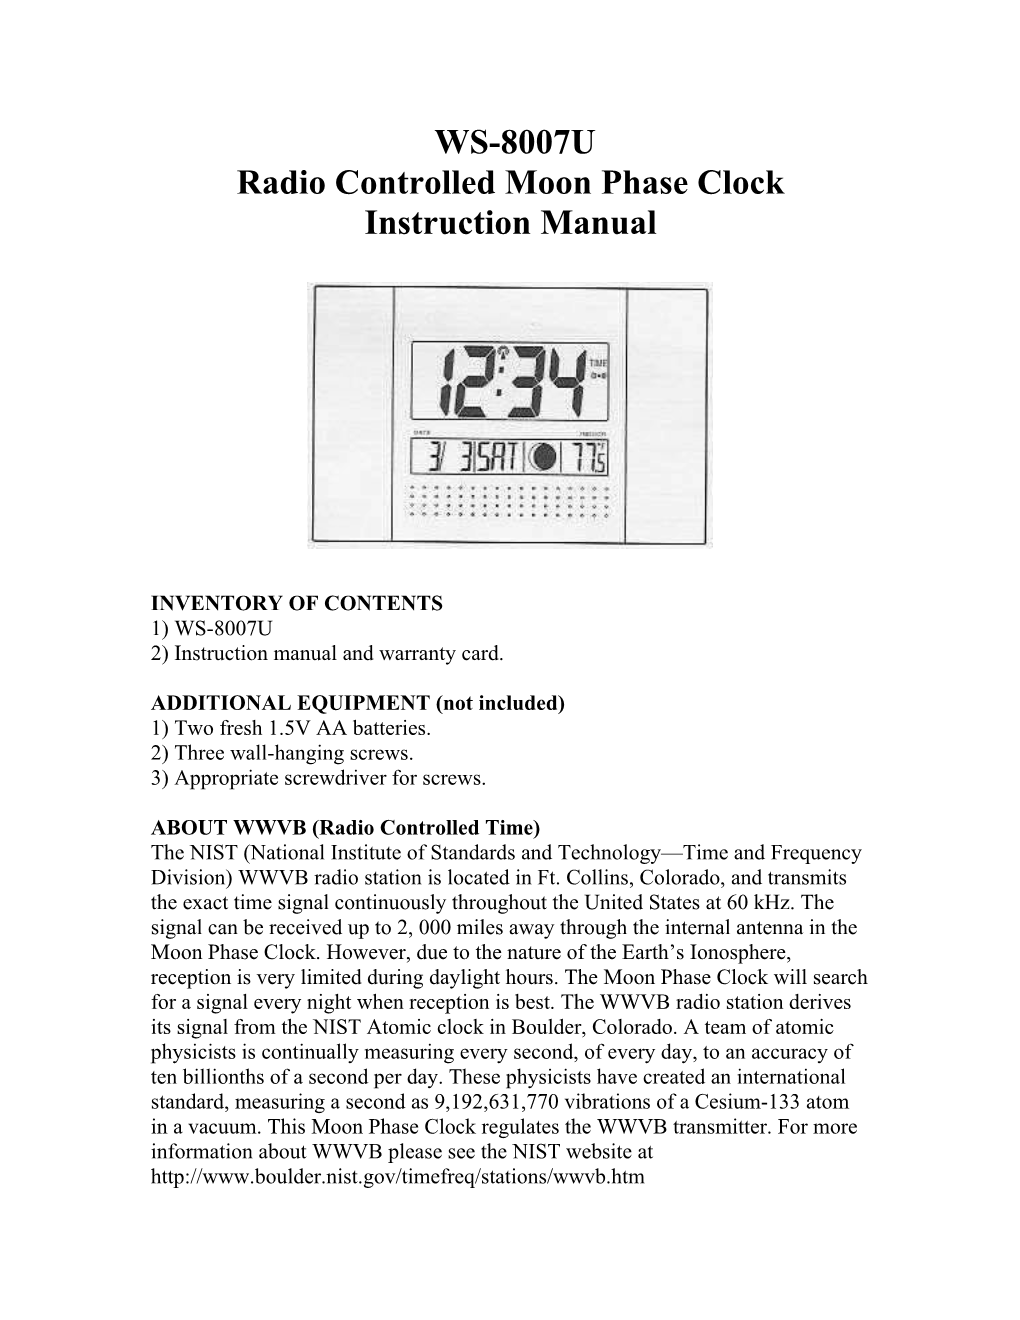 Radio Controlled Moon Phase Clock